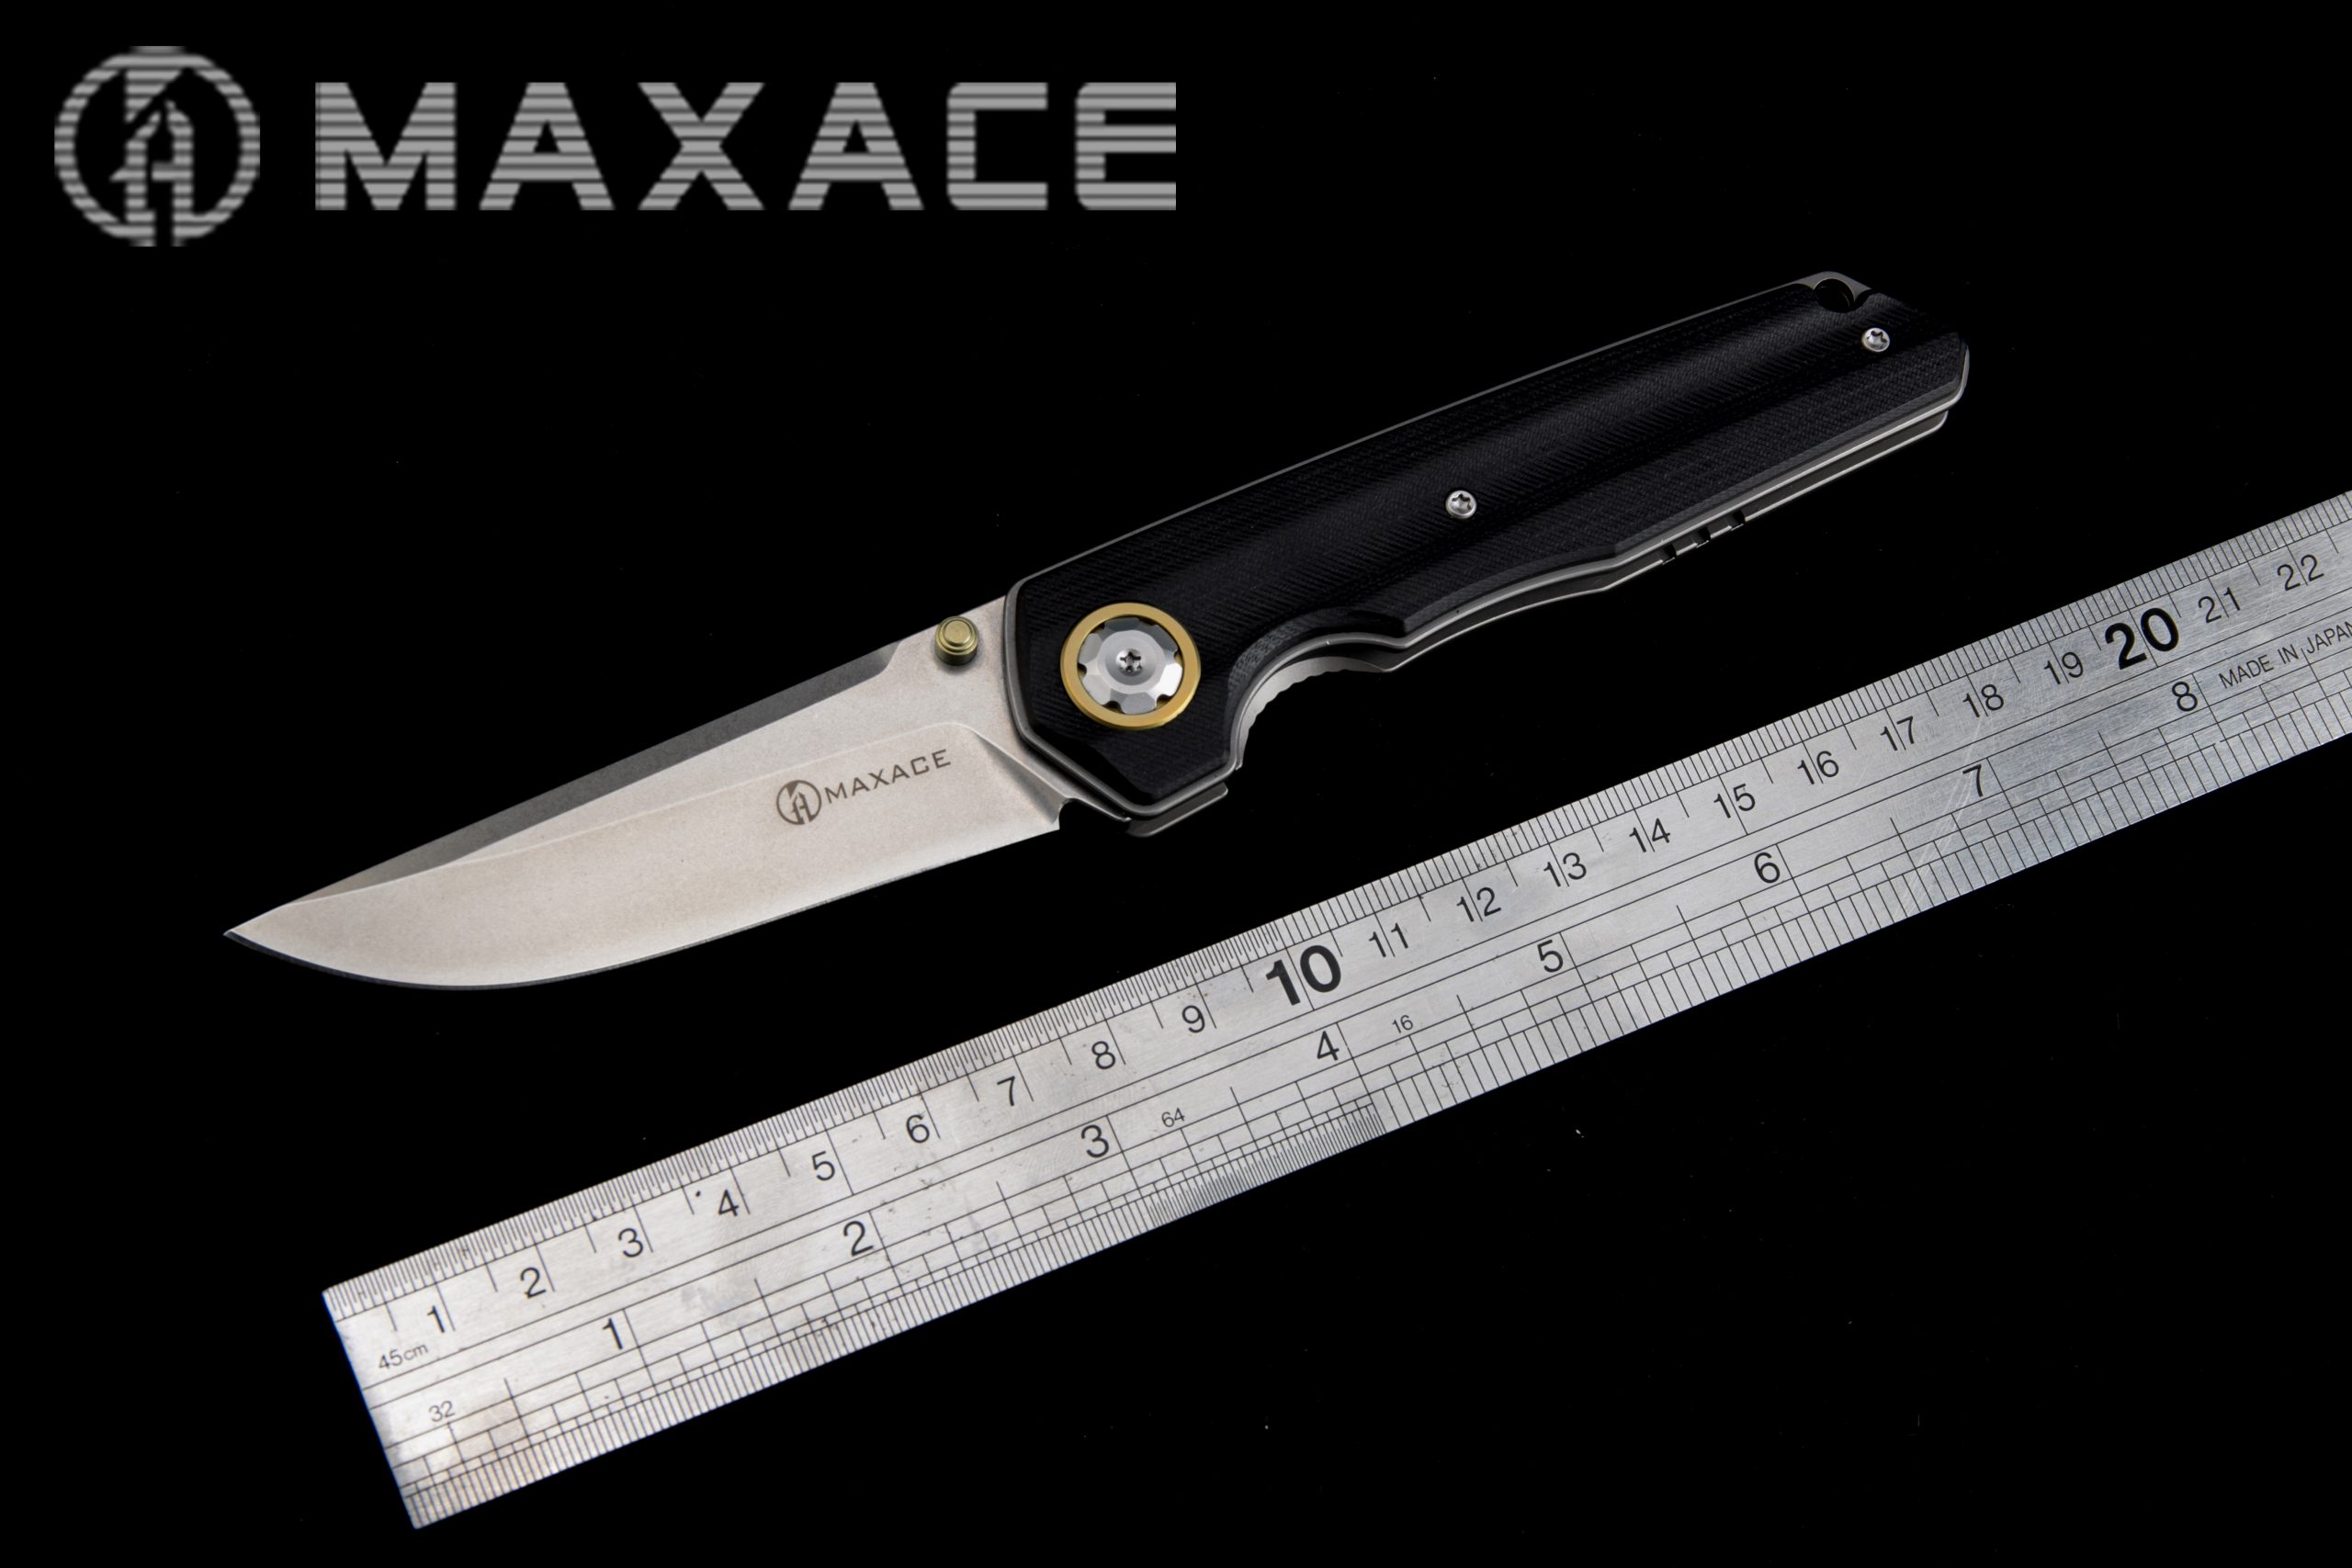 SAMURAI II – Maxaceknives